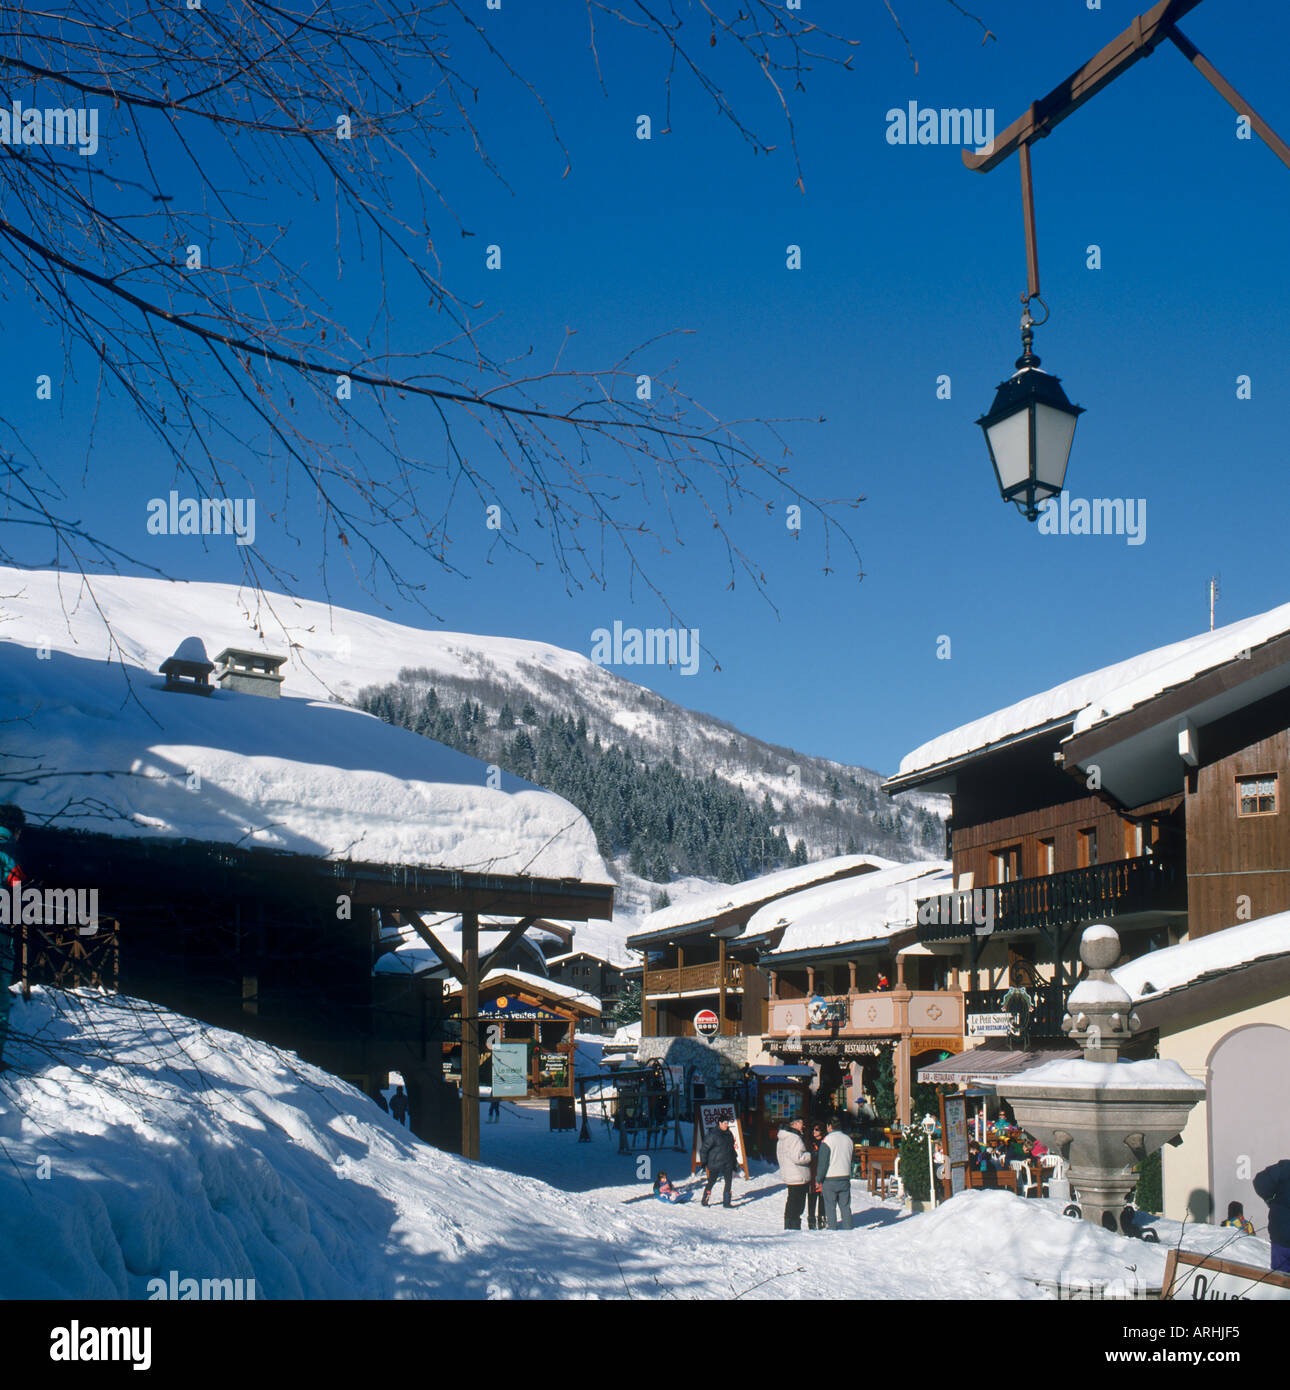 El centro del resort, Valmorel, Tarentaise, Savoie, Alpes franceses, Francia Foto de stock